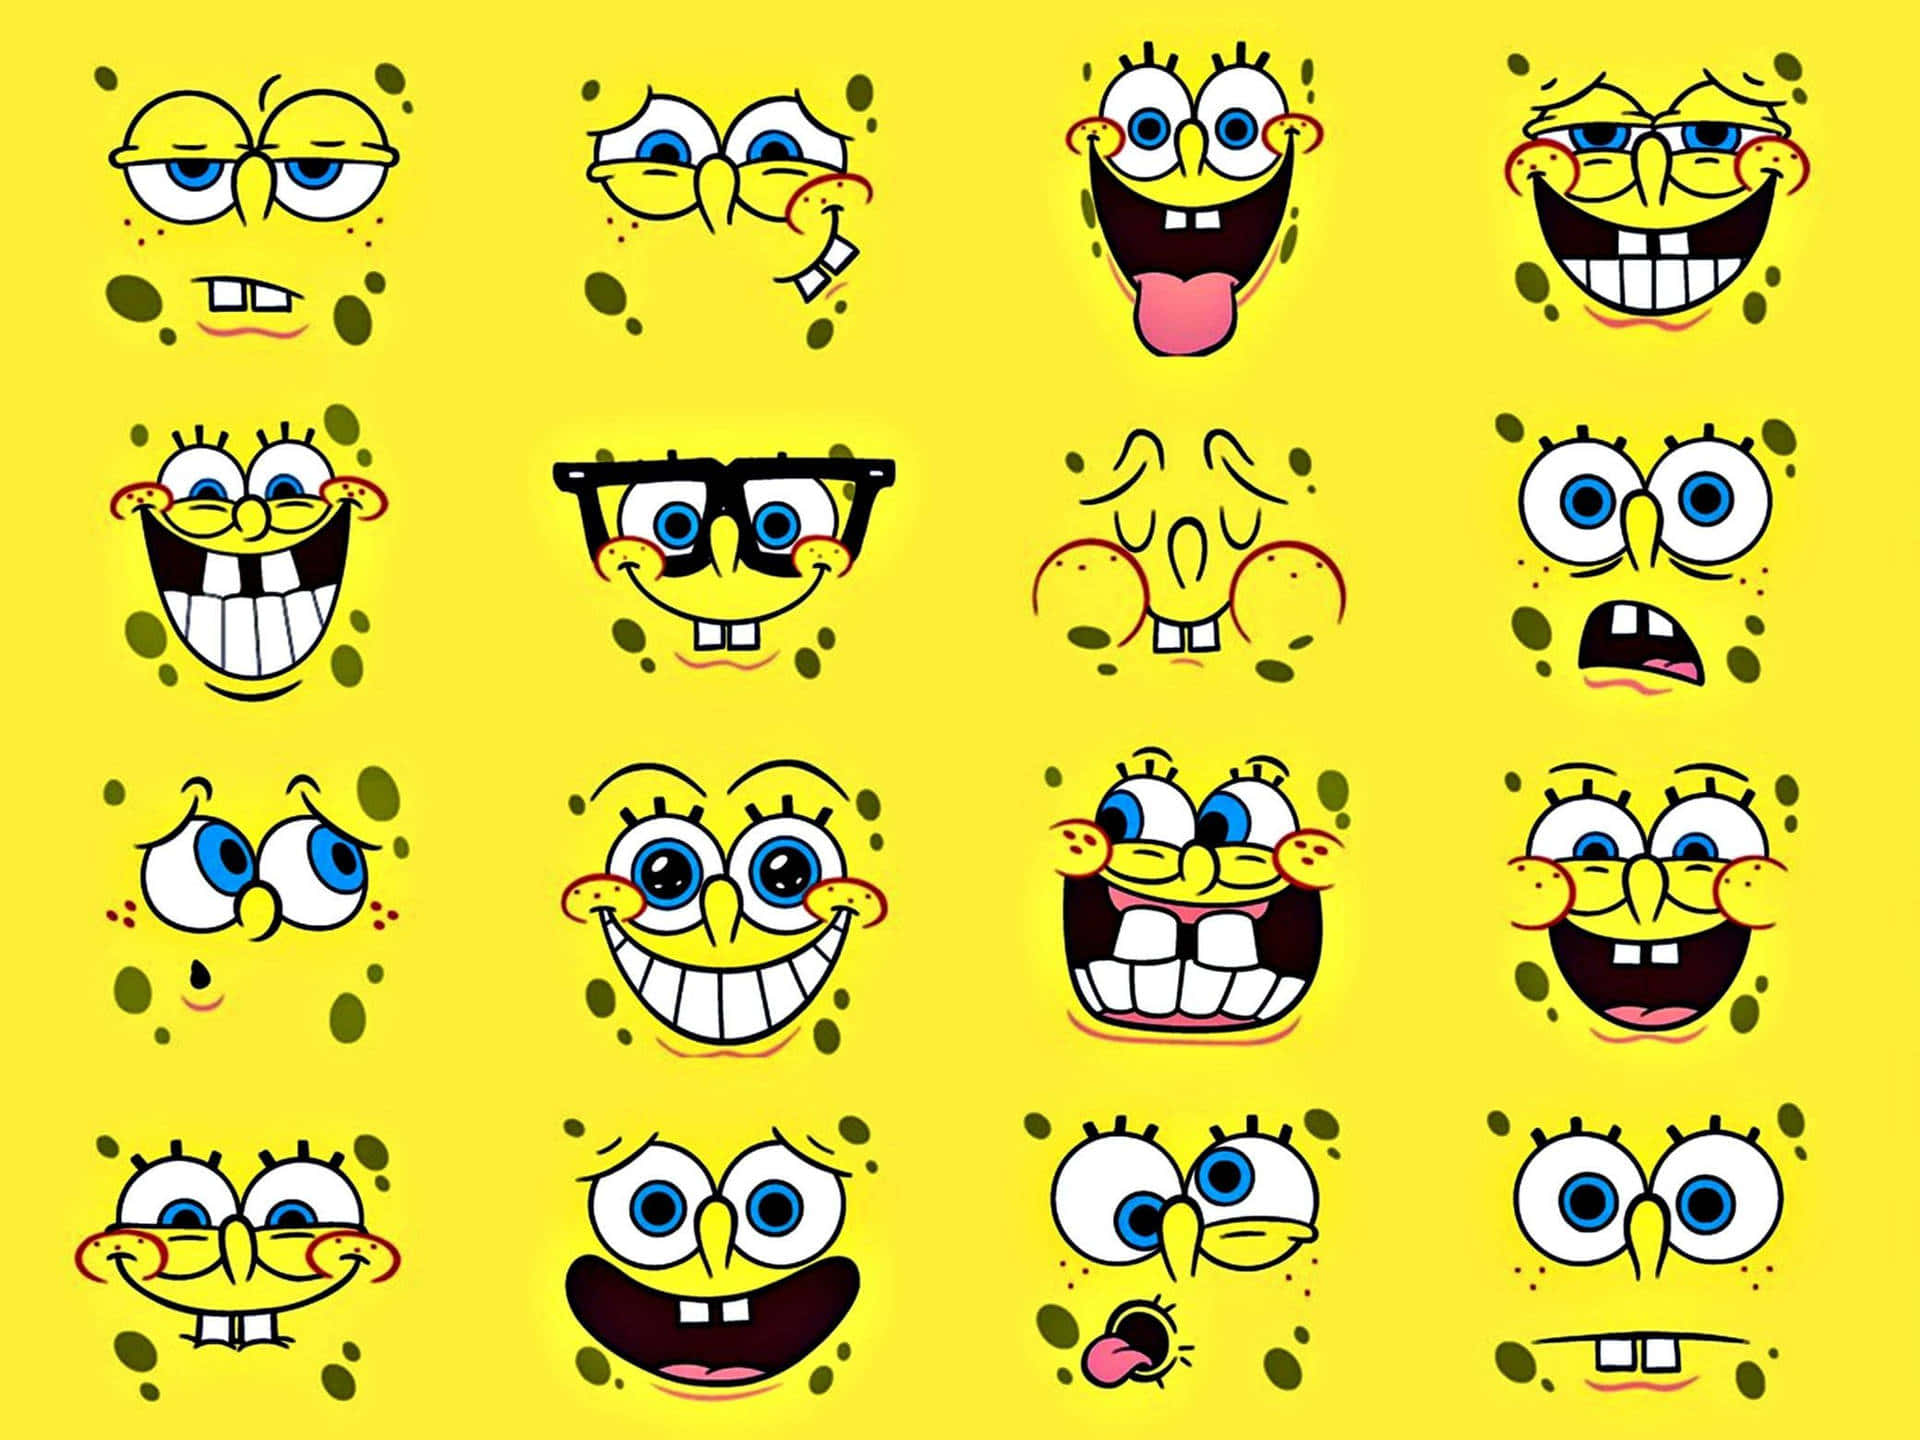 Laughing Out Loud with Spongebob Squarepants! Wallpaper